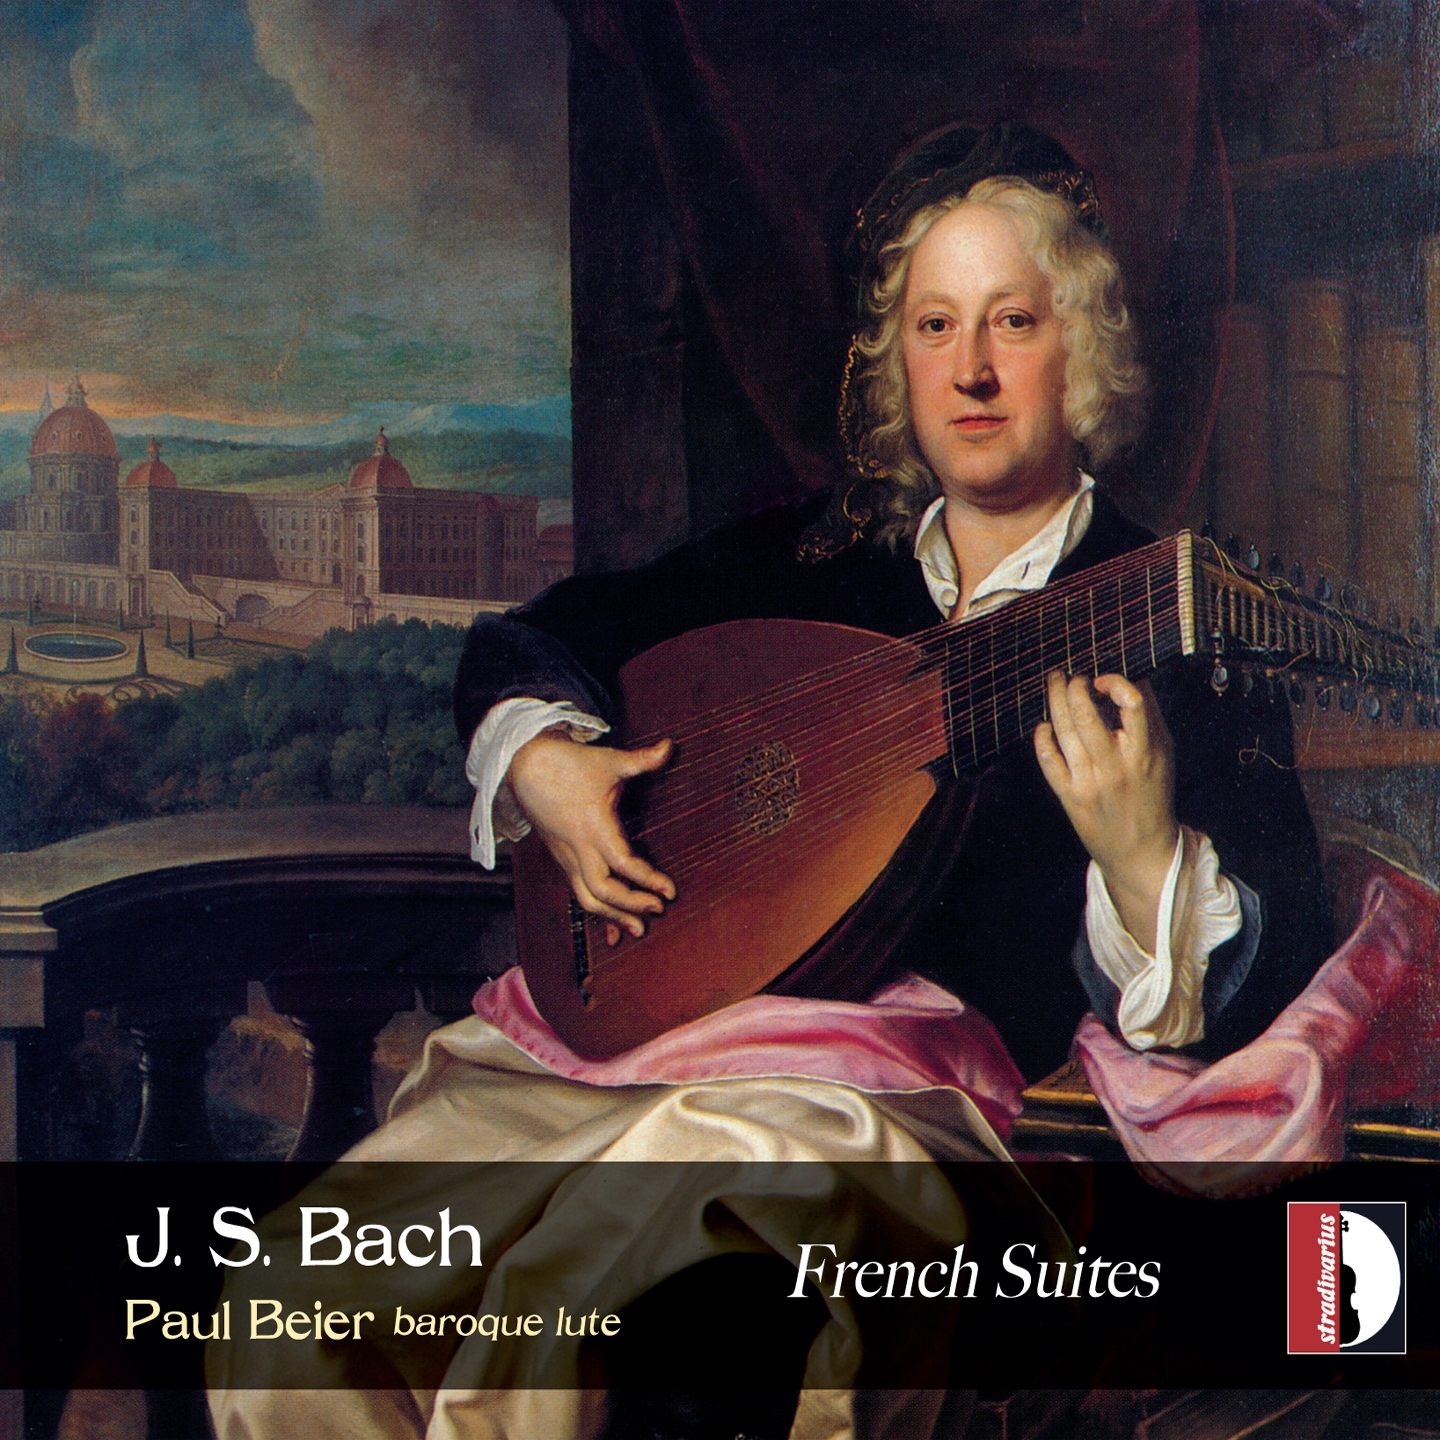 6 French Suites, No. 4 in D Major, BWV 815: V. Gavottes I & II (Transcription for Lute)